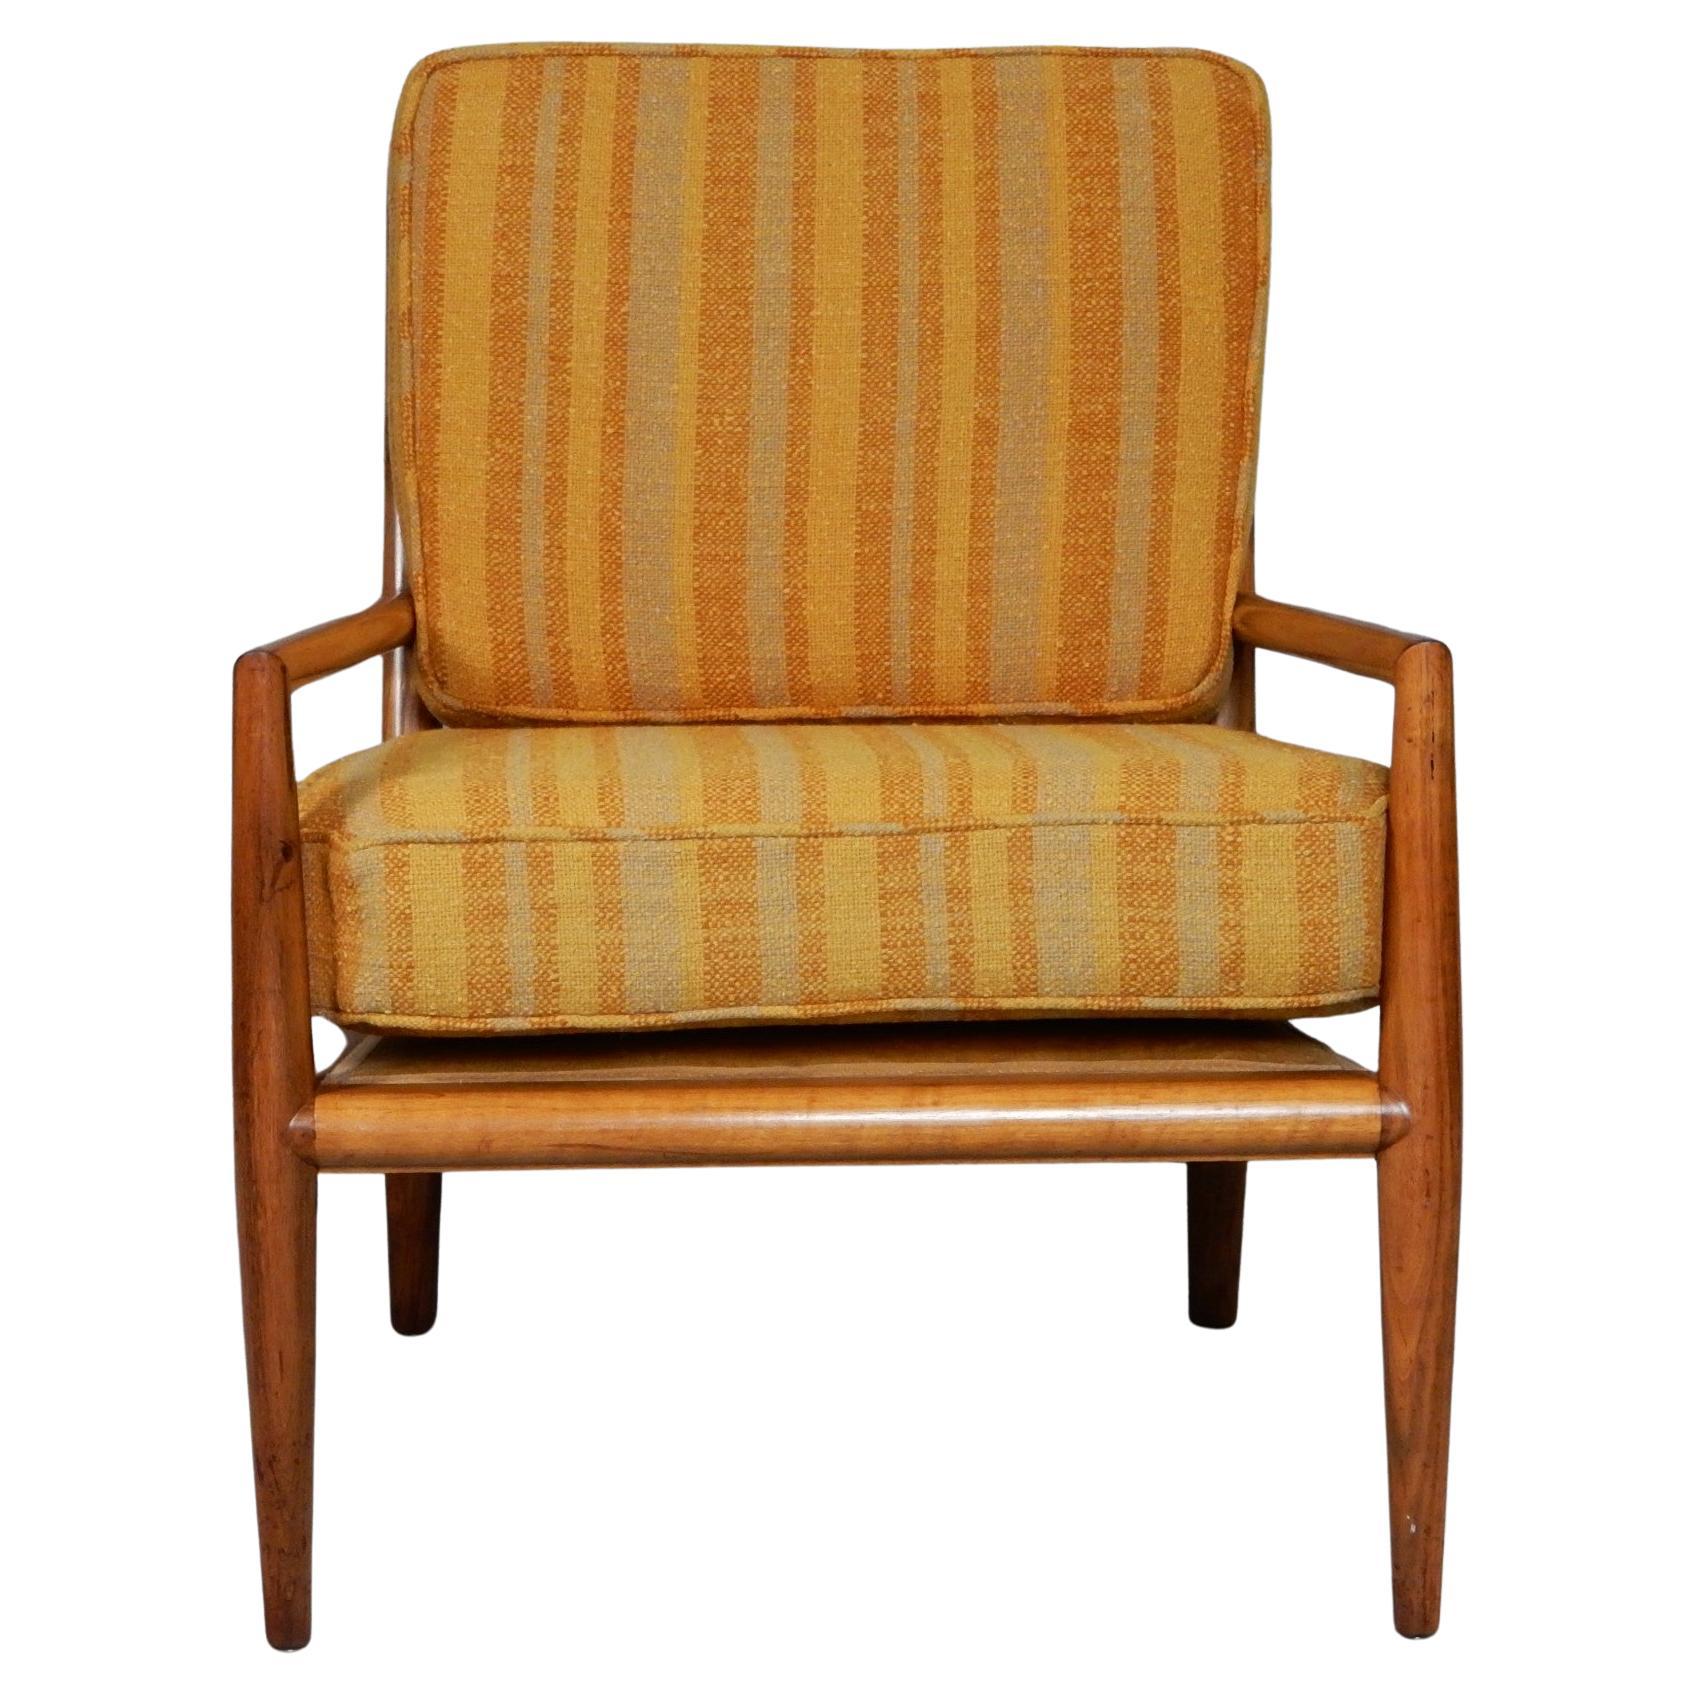 T.H. Robsjohn-Gibbings Lounge Chair & Ottoman by Widdicomb 1950's For Sale 3